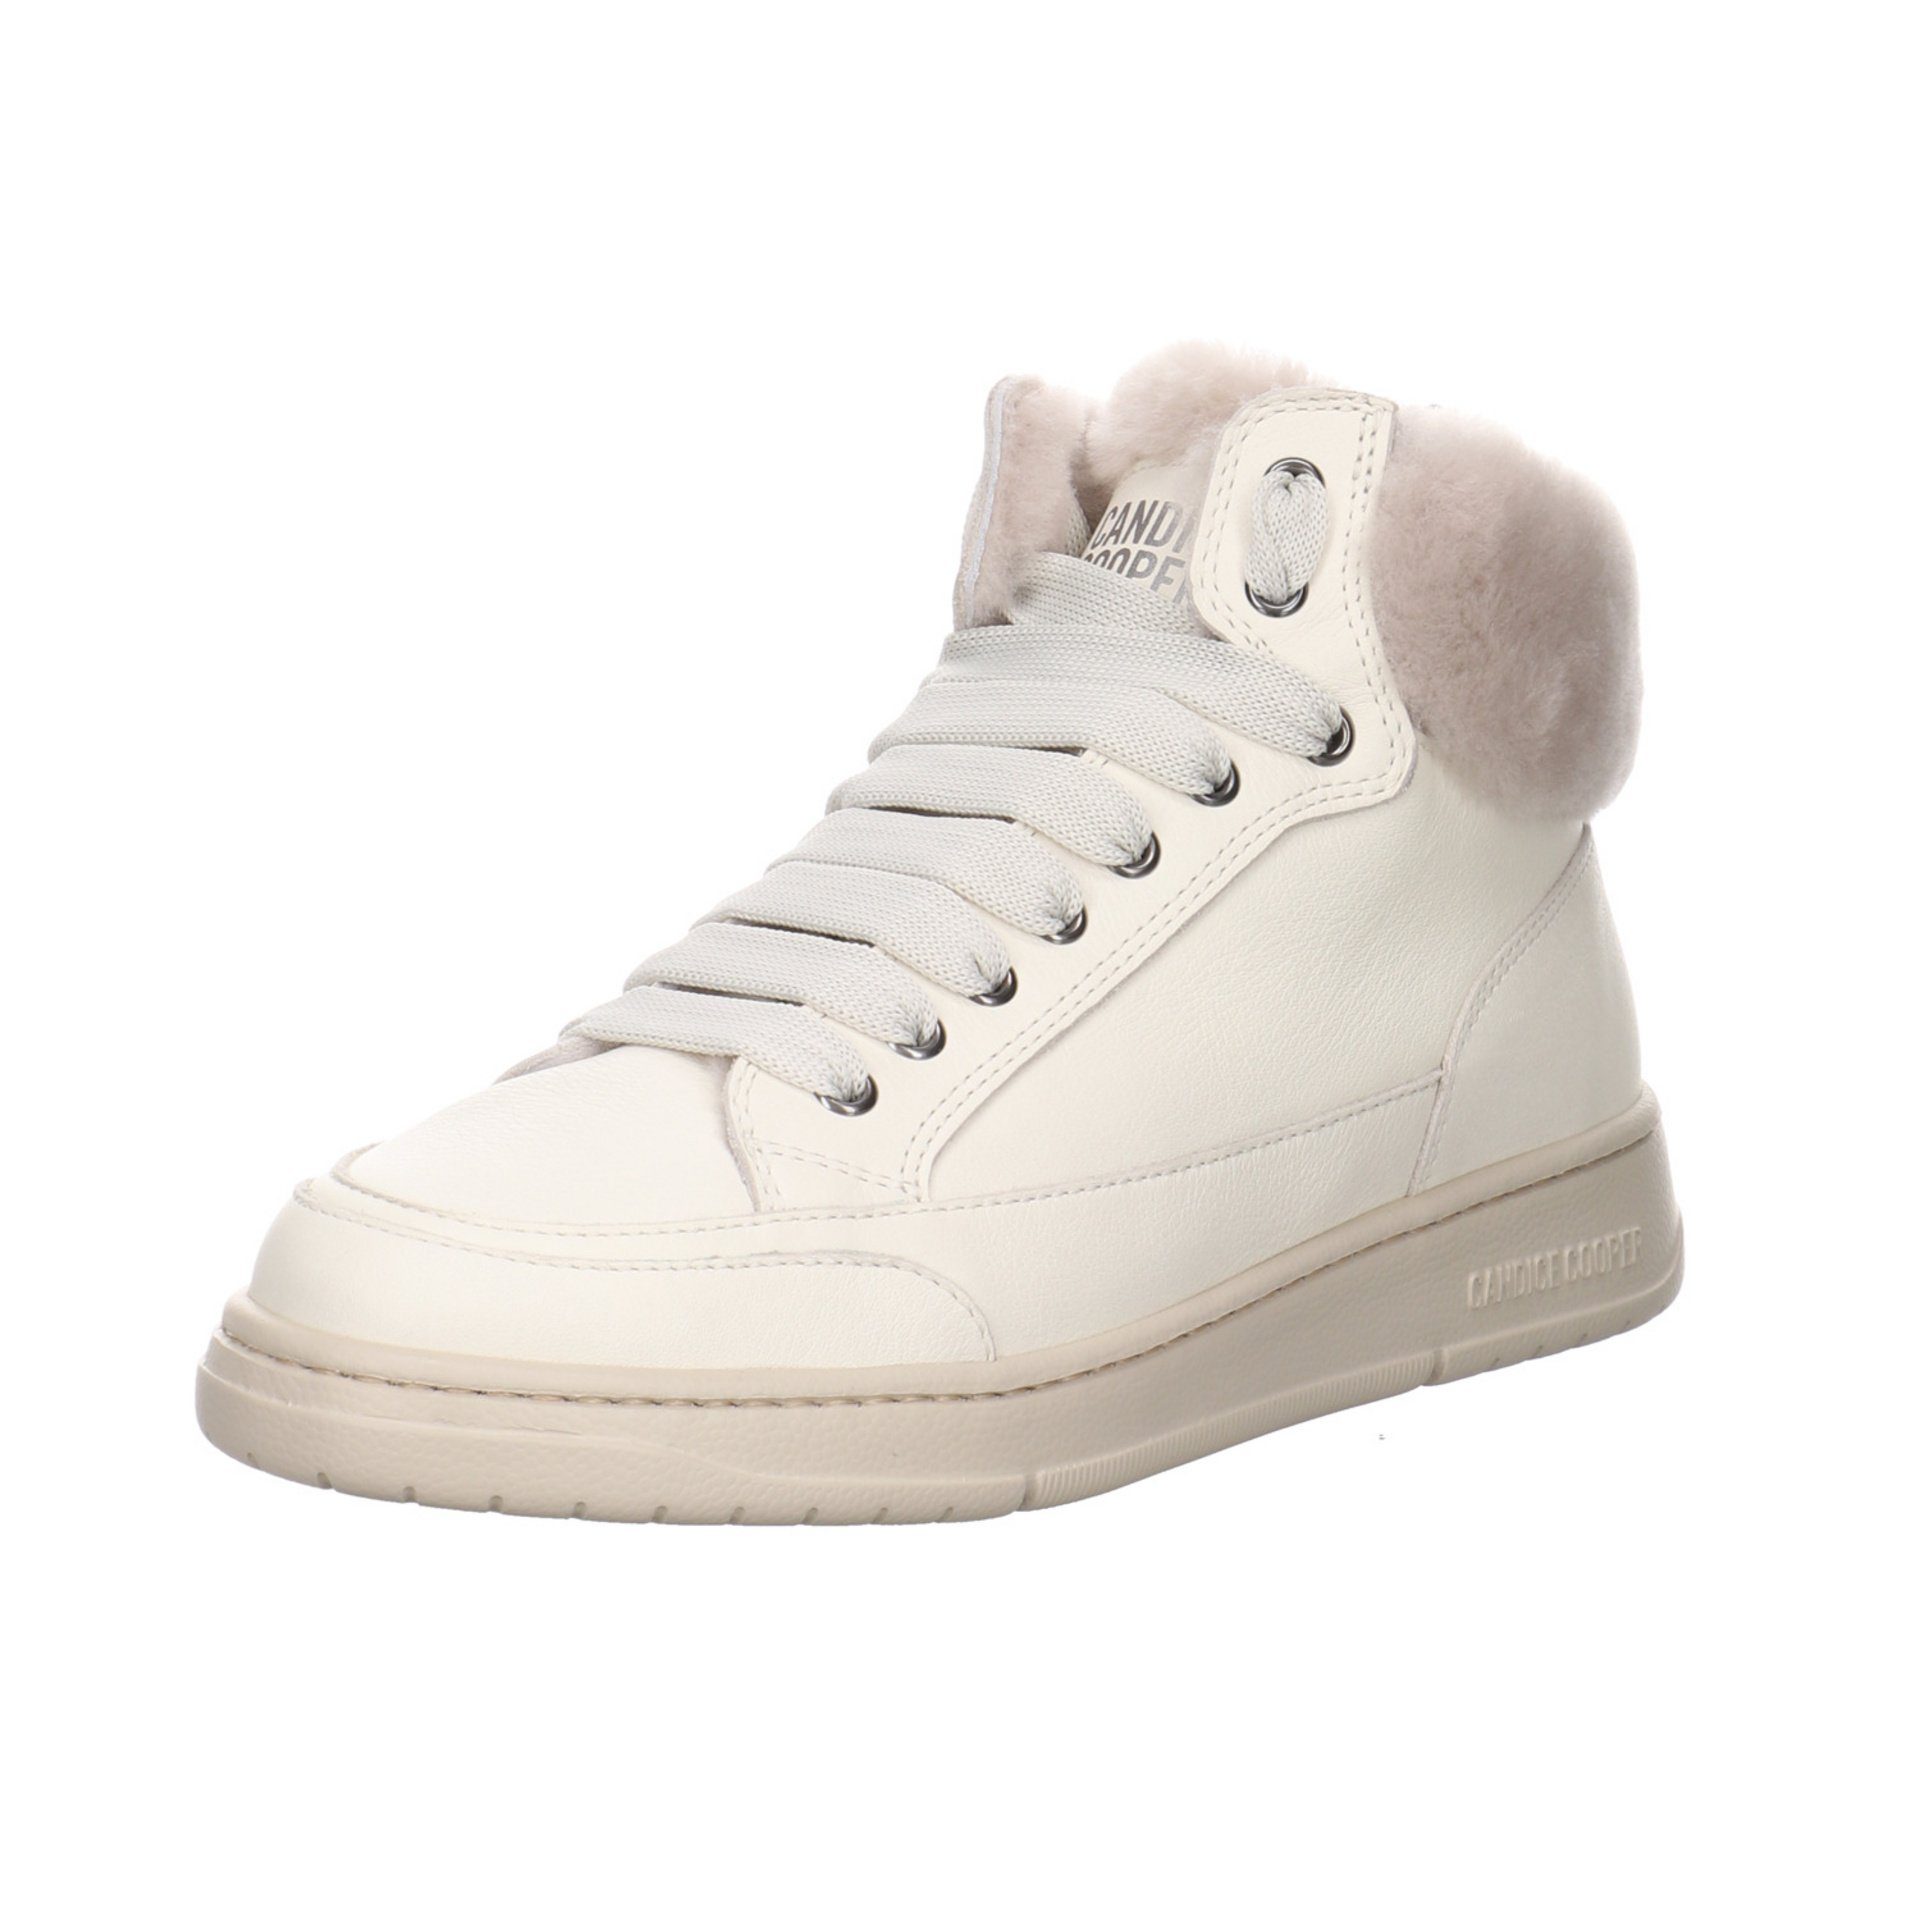 Candice Cooper Damen Sneaker Schuhe Vela Mid Fur High-Top Sneaker Sneaker Glattleder | Stiefel